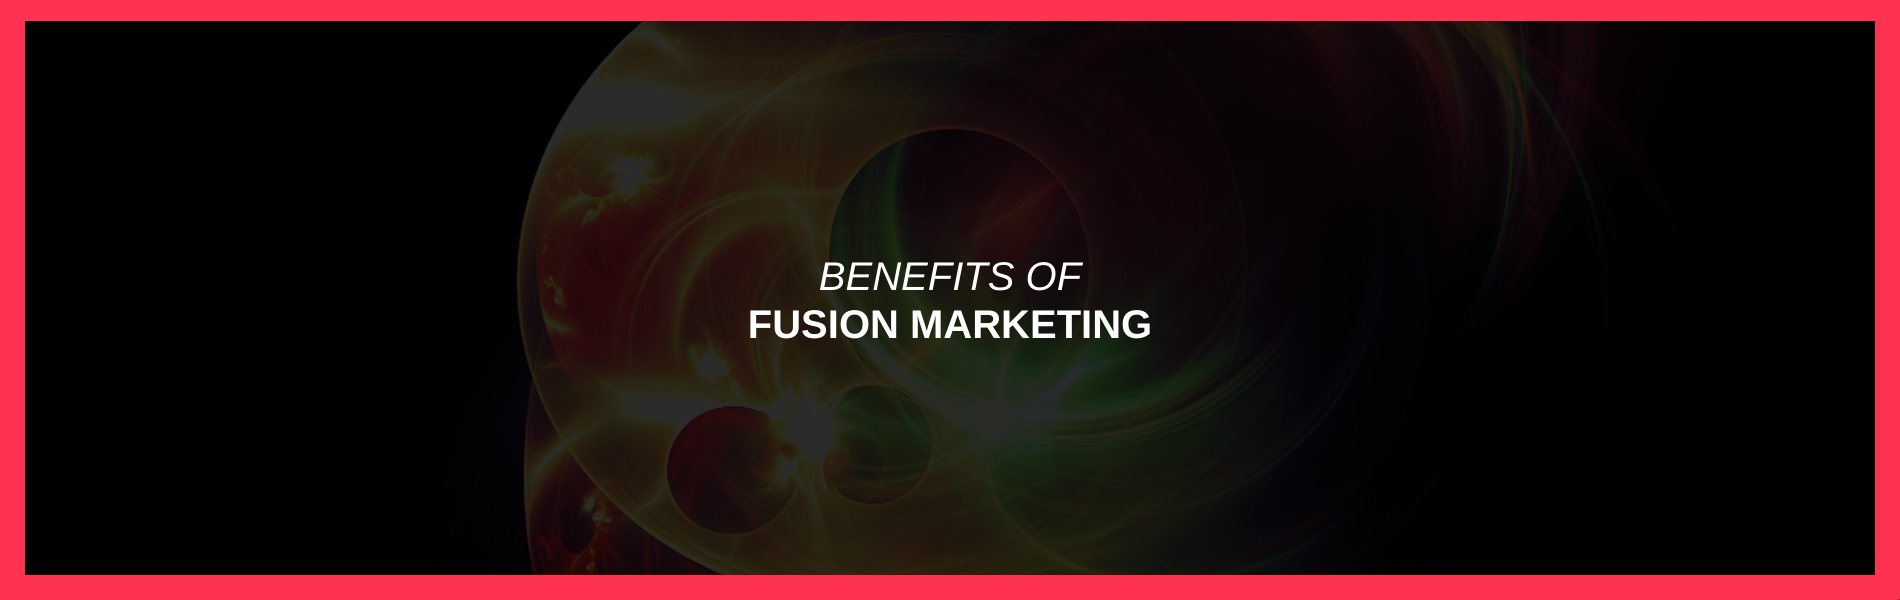 Benefits of Fusion Marketing